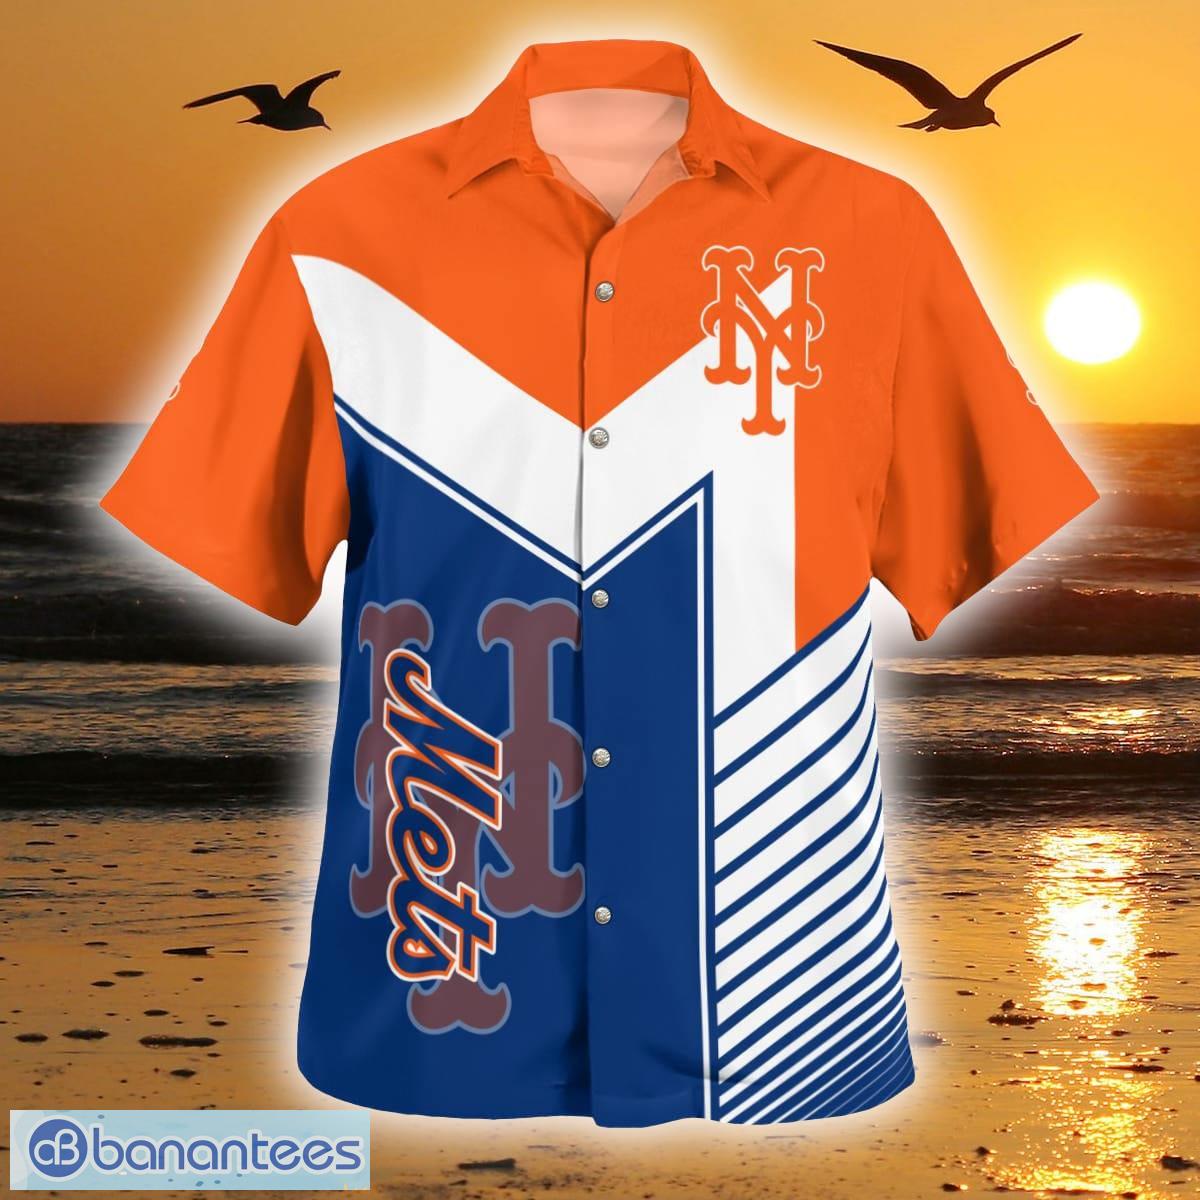 MLB New York Mets Hawaiian Shirt & Short For Fans - Freedomdesign